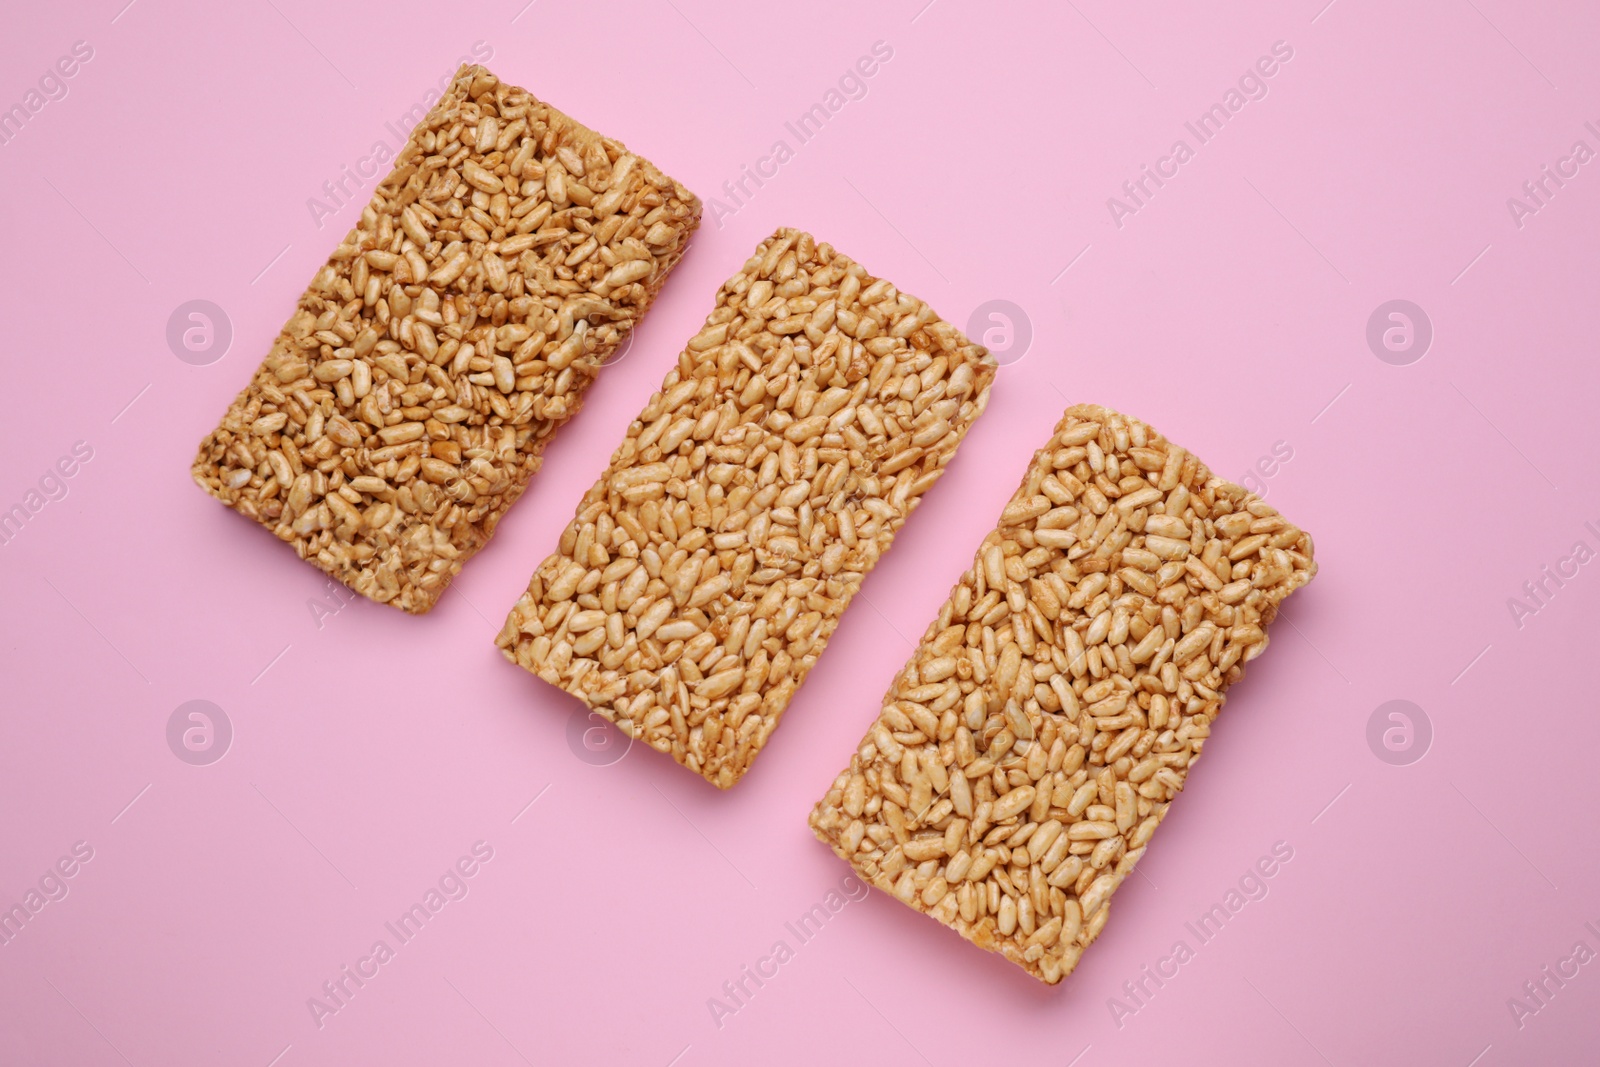 Photo of Puffed rice bars (kozinaki) on pink background, flat lay